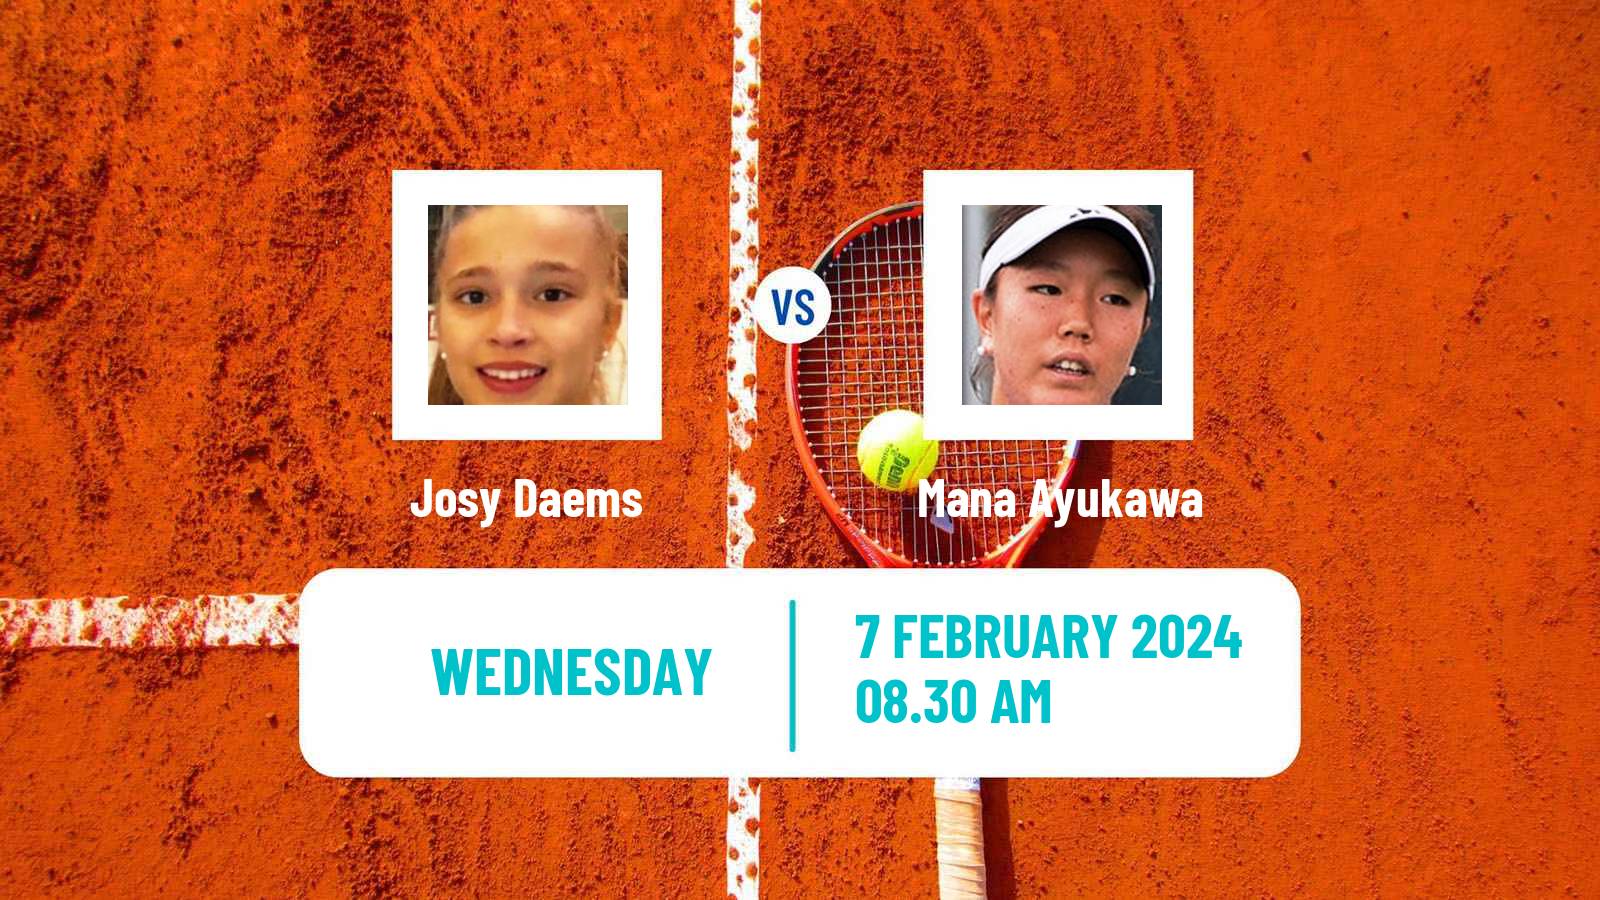 Tennis ITF W15 Monastir 4 Women Josy Daems - Mana Ayukawa